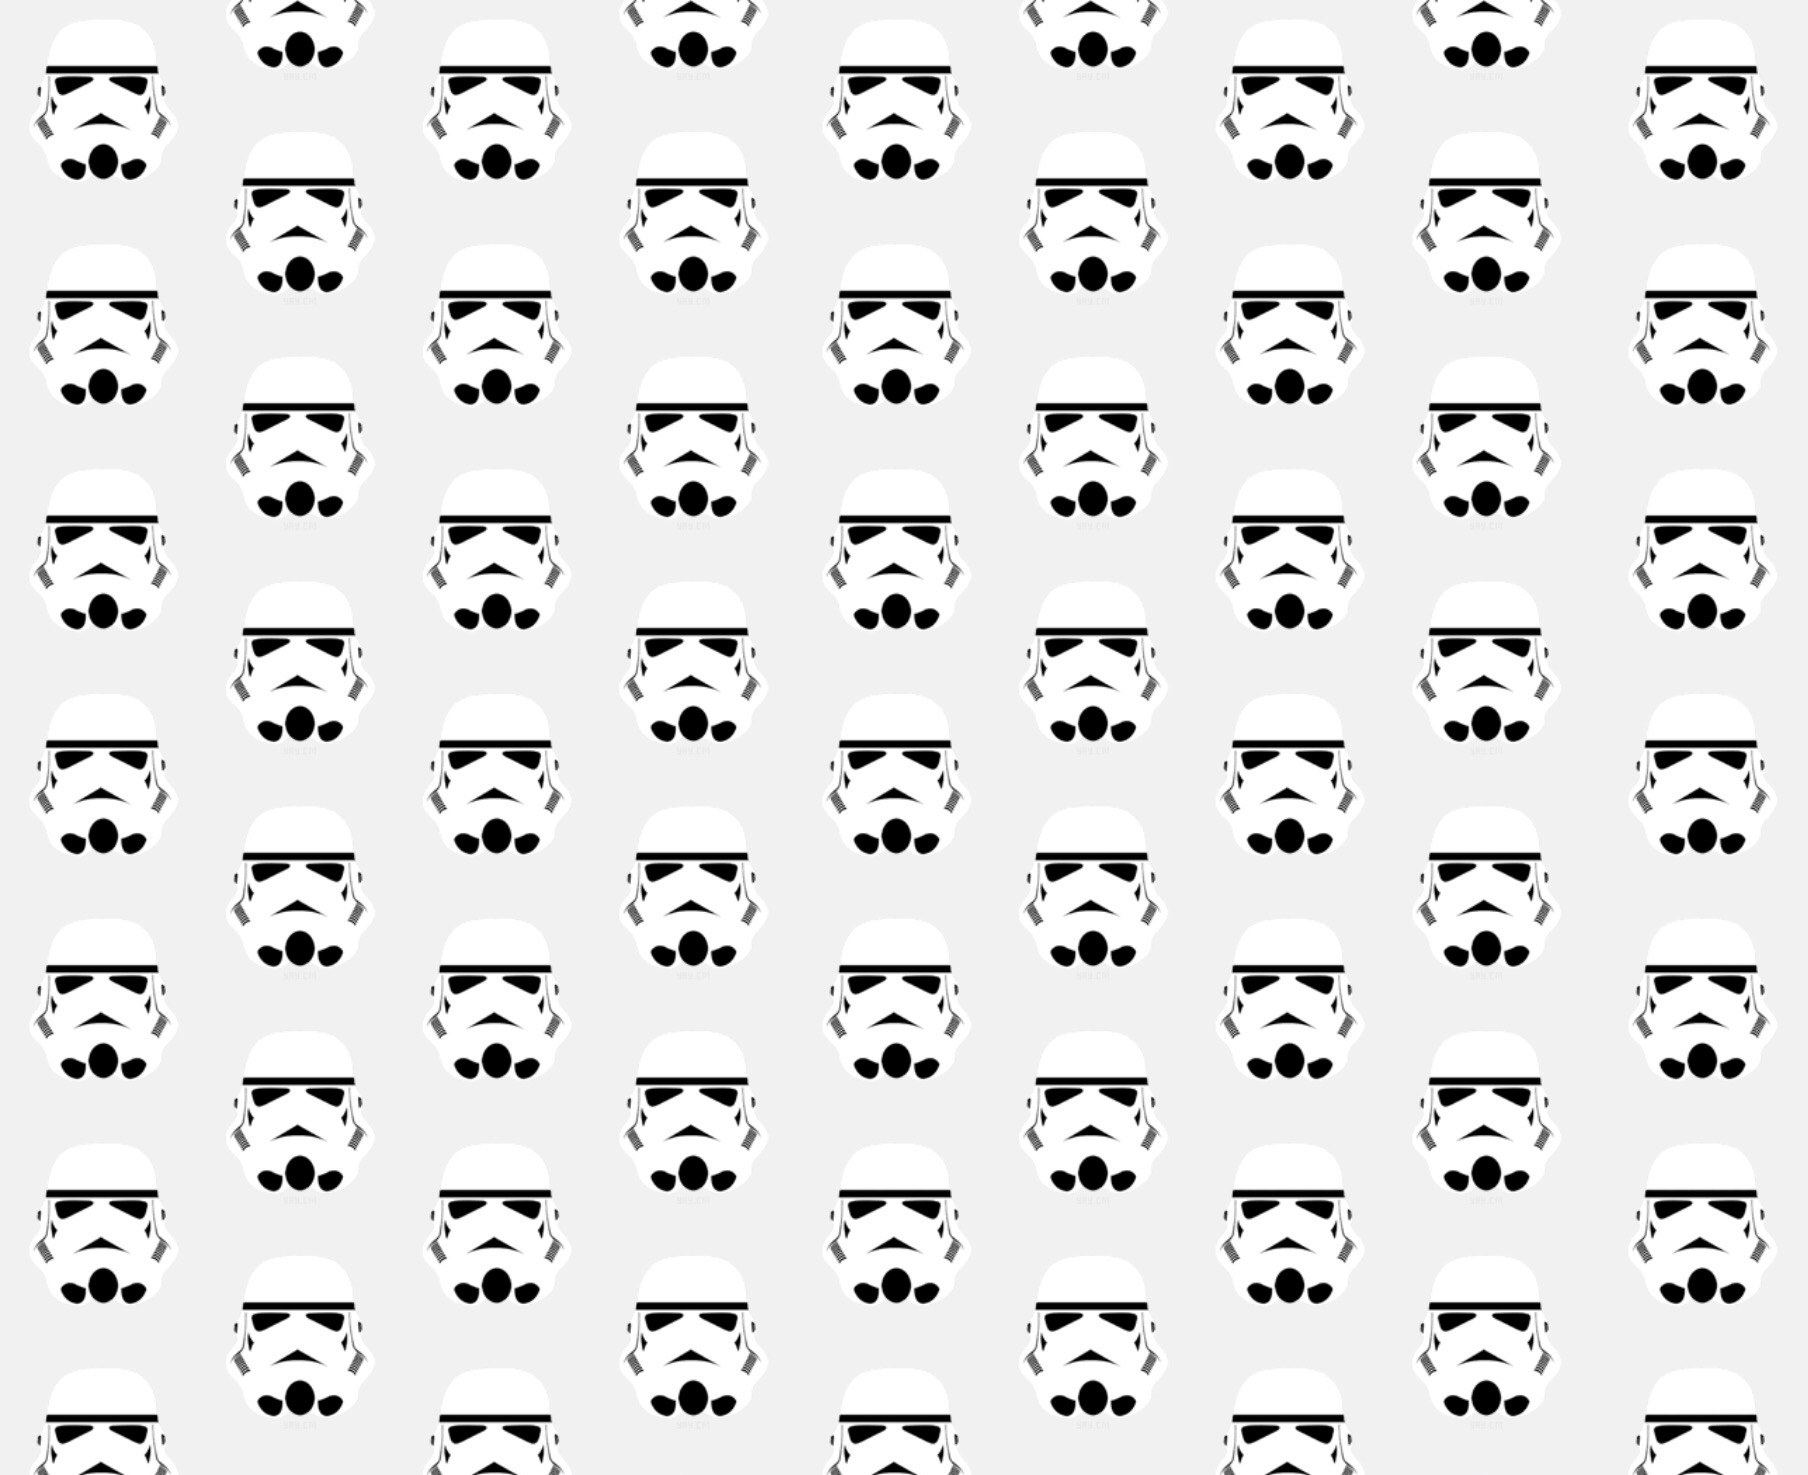 Star Wars Stormtroopers Wallpaper Patterns Background